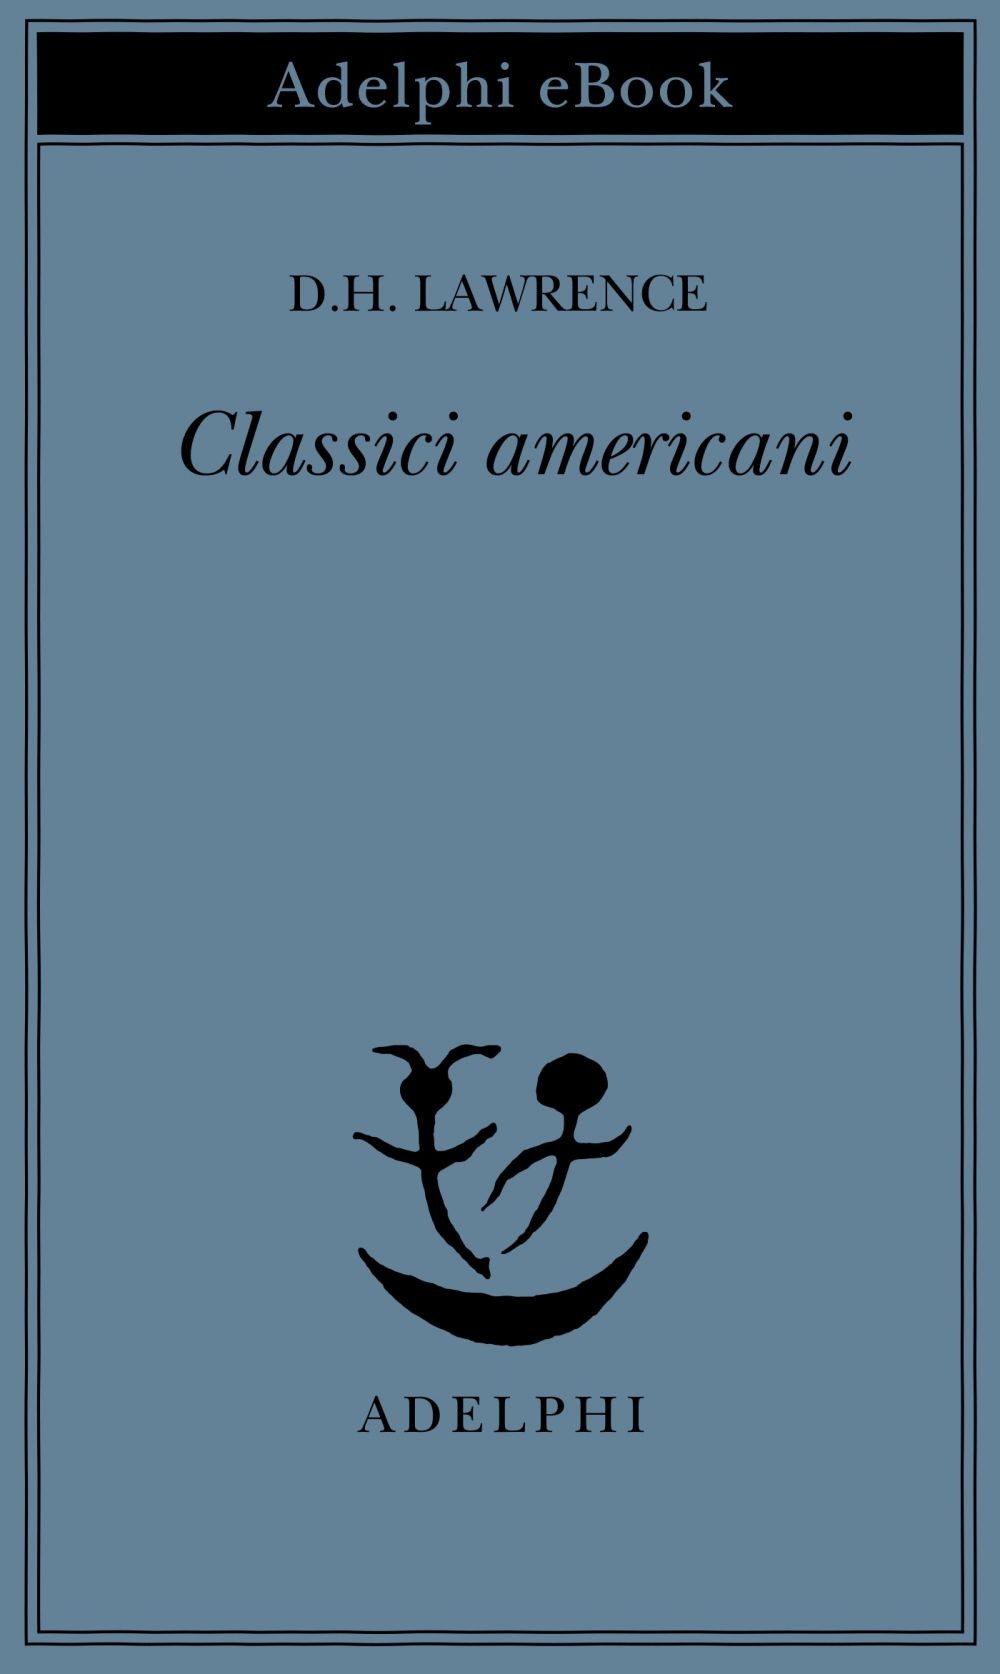 Classici americani - Librerie.coop